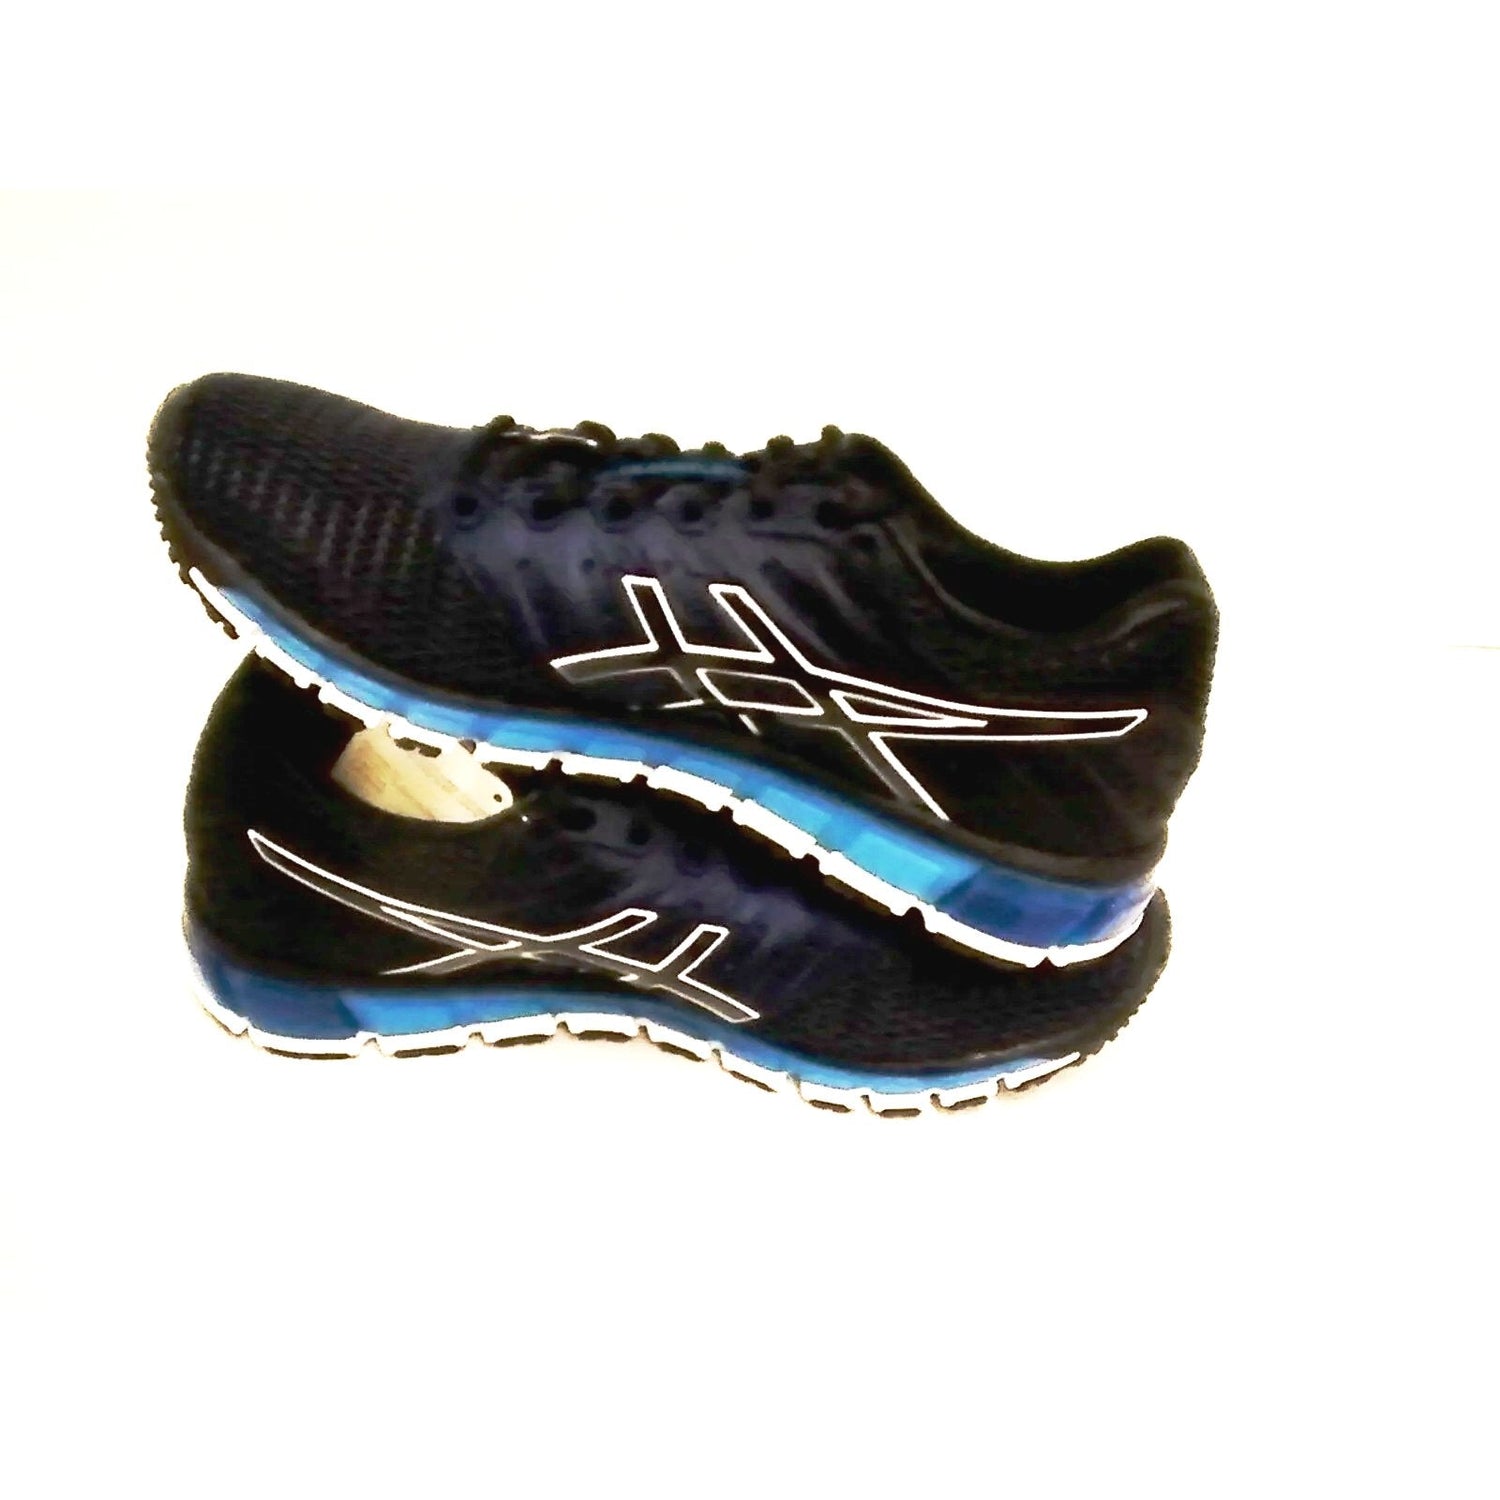 Asics men's gel quantum 180 2 running shoes peacoat black blue size 13 us - Classic Fashion Deals